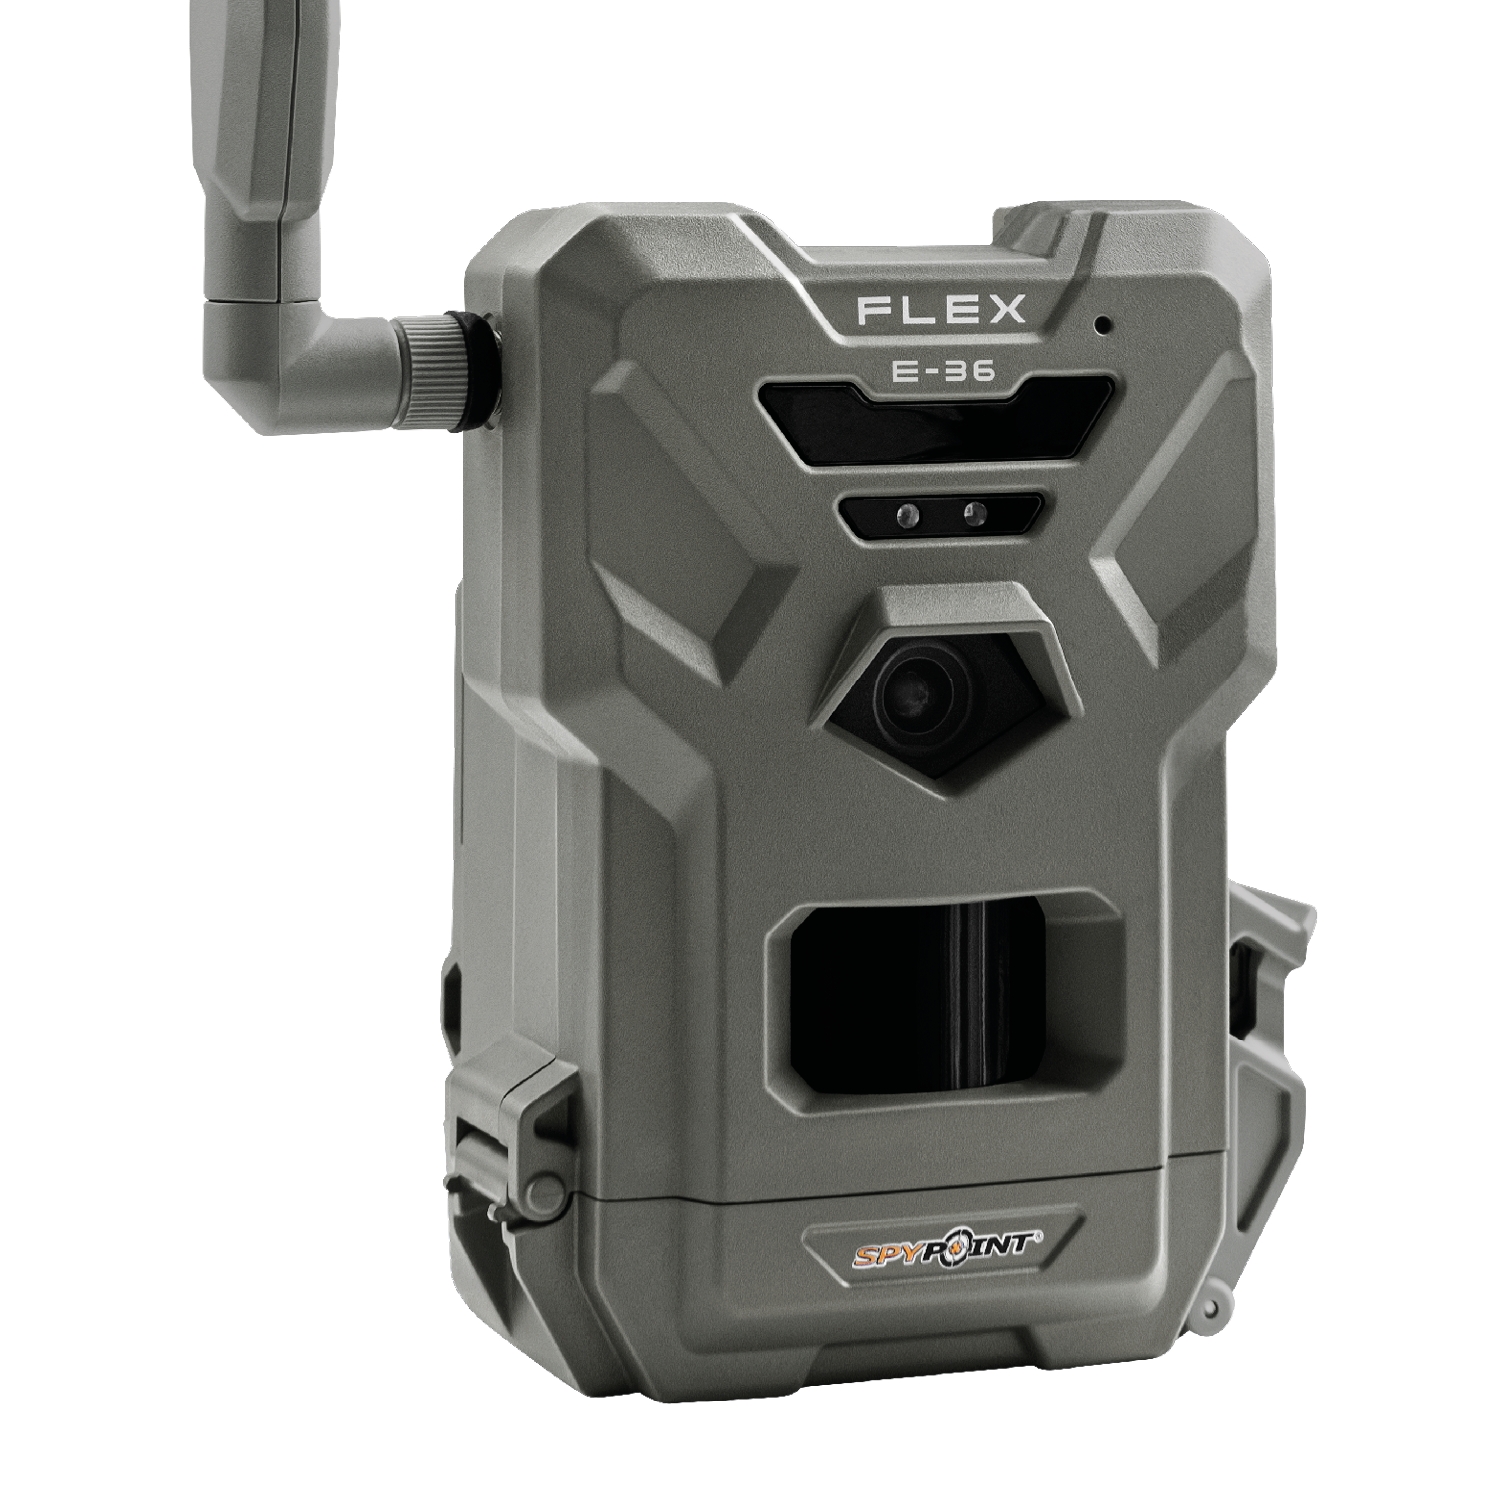 Spypoint FLEX E-36 4G Cellular Trail Camera